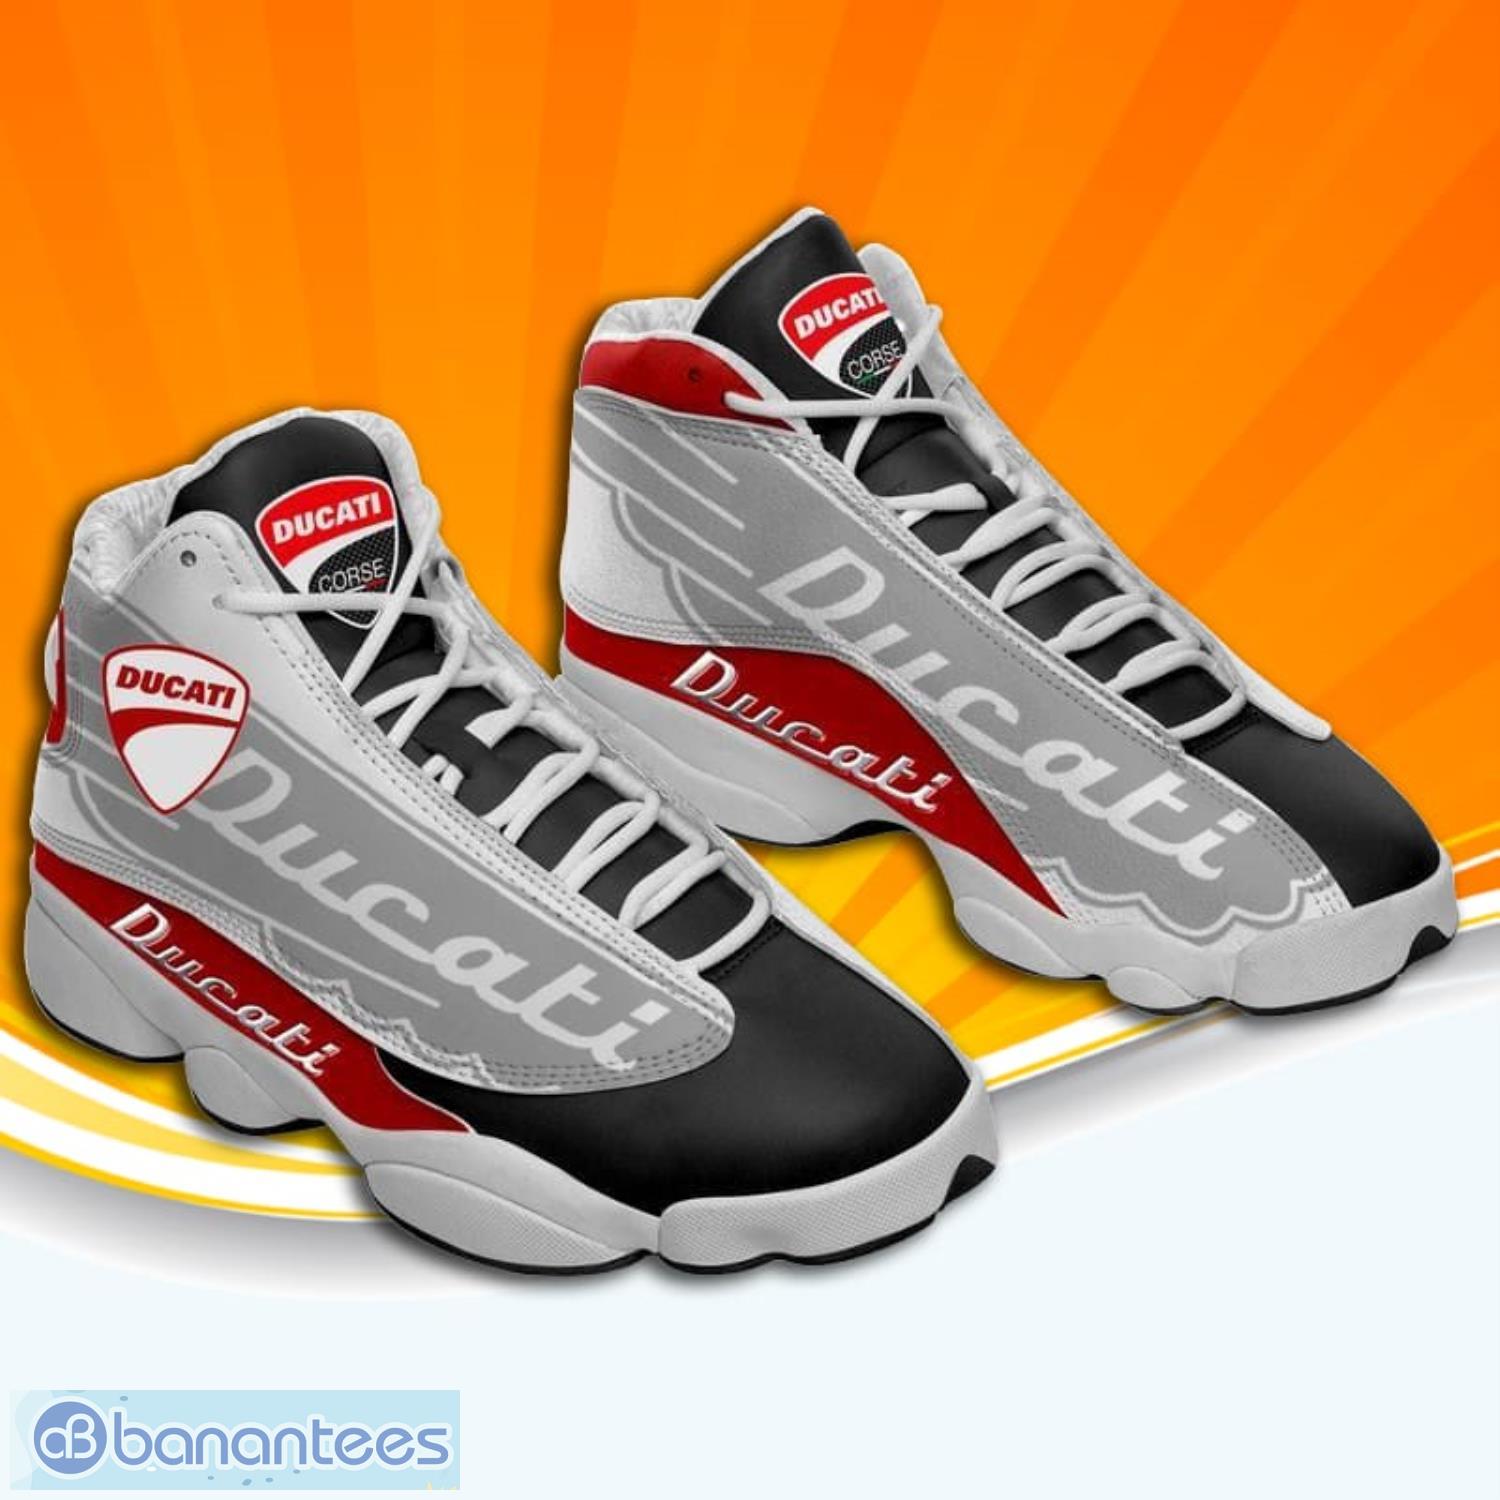 Ducati Sport Shoes Air Jordan 13 Sneaker Shoes Product Photo 1